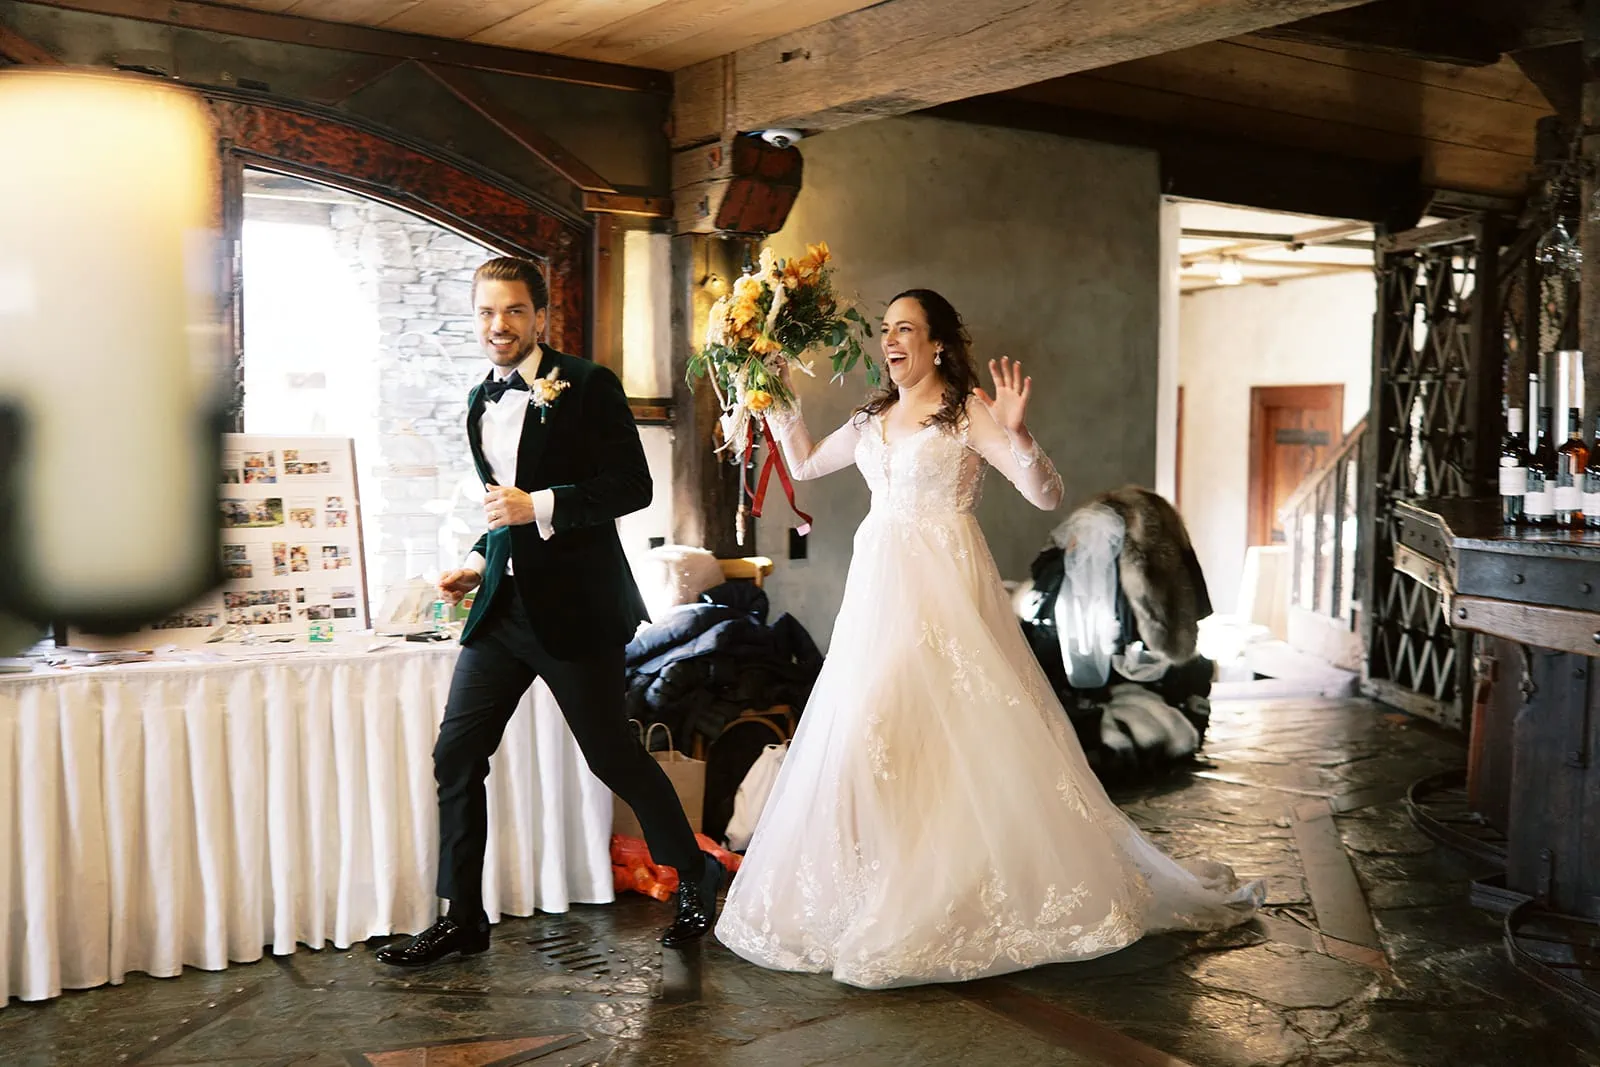 Queenstown Wedding Photographer Nat & Tim, a bride and groom, gracefully traverse through an enchanting room during their Queenstown elopement wedding at Deer Park Heights.